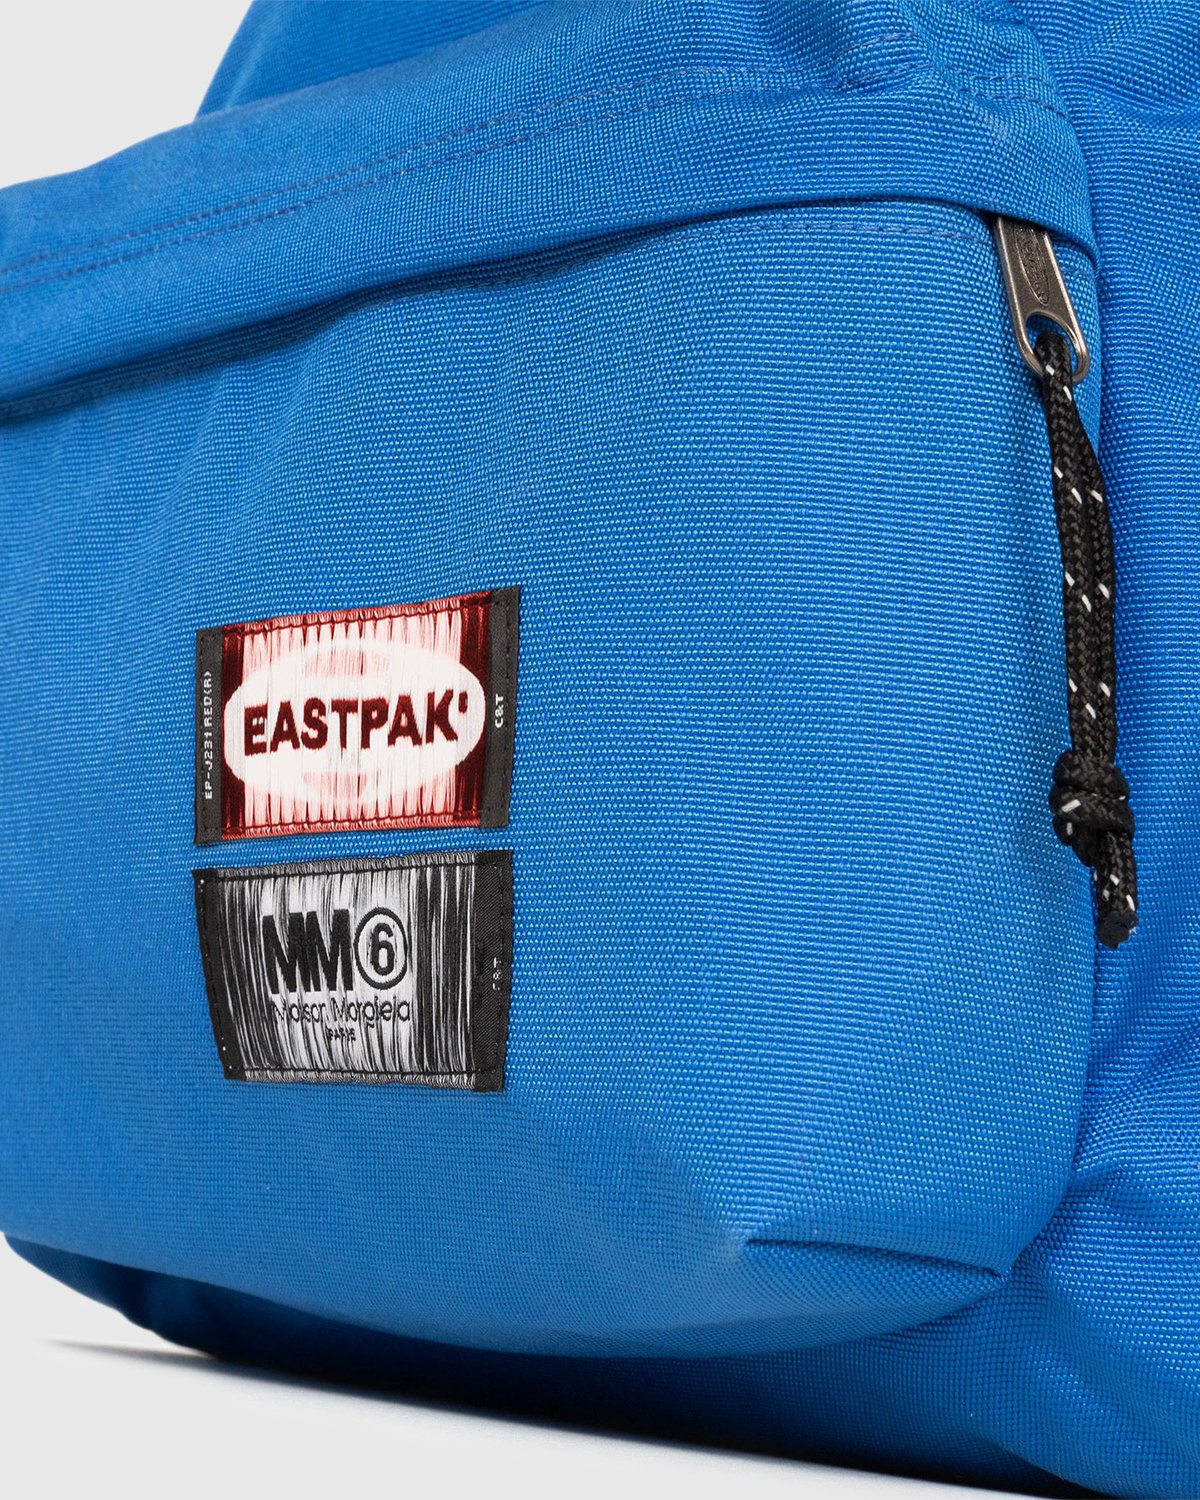 MM6 Maison Margiela x Eastpak - Padded Backpack Dazzling Blue - Accessories - Blue - Image 7